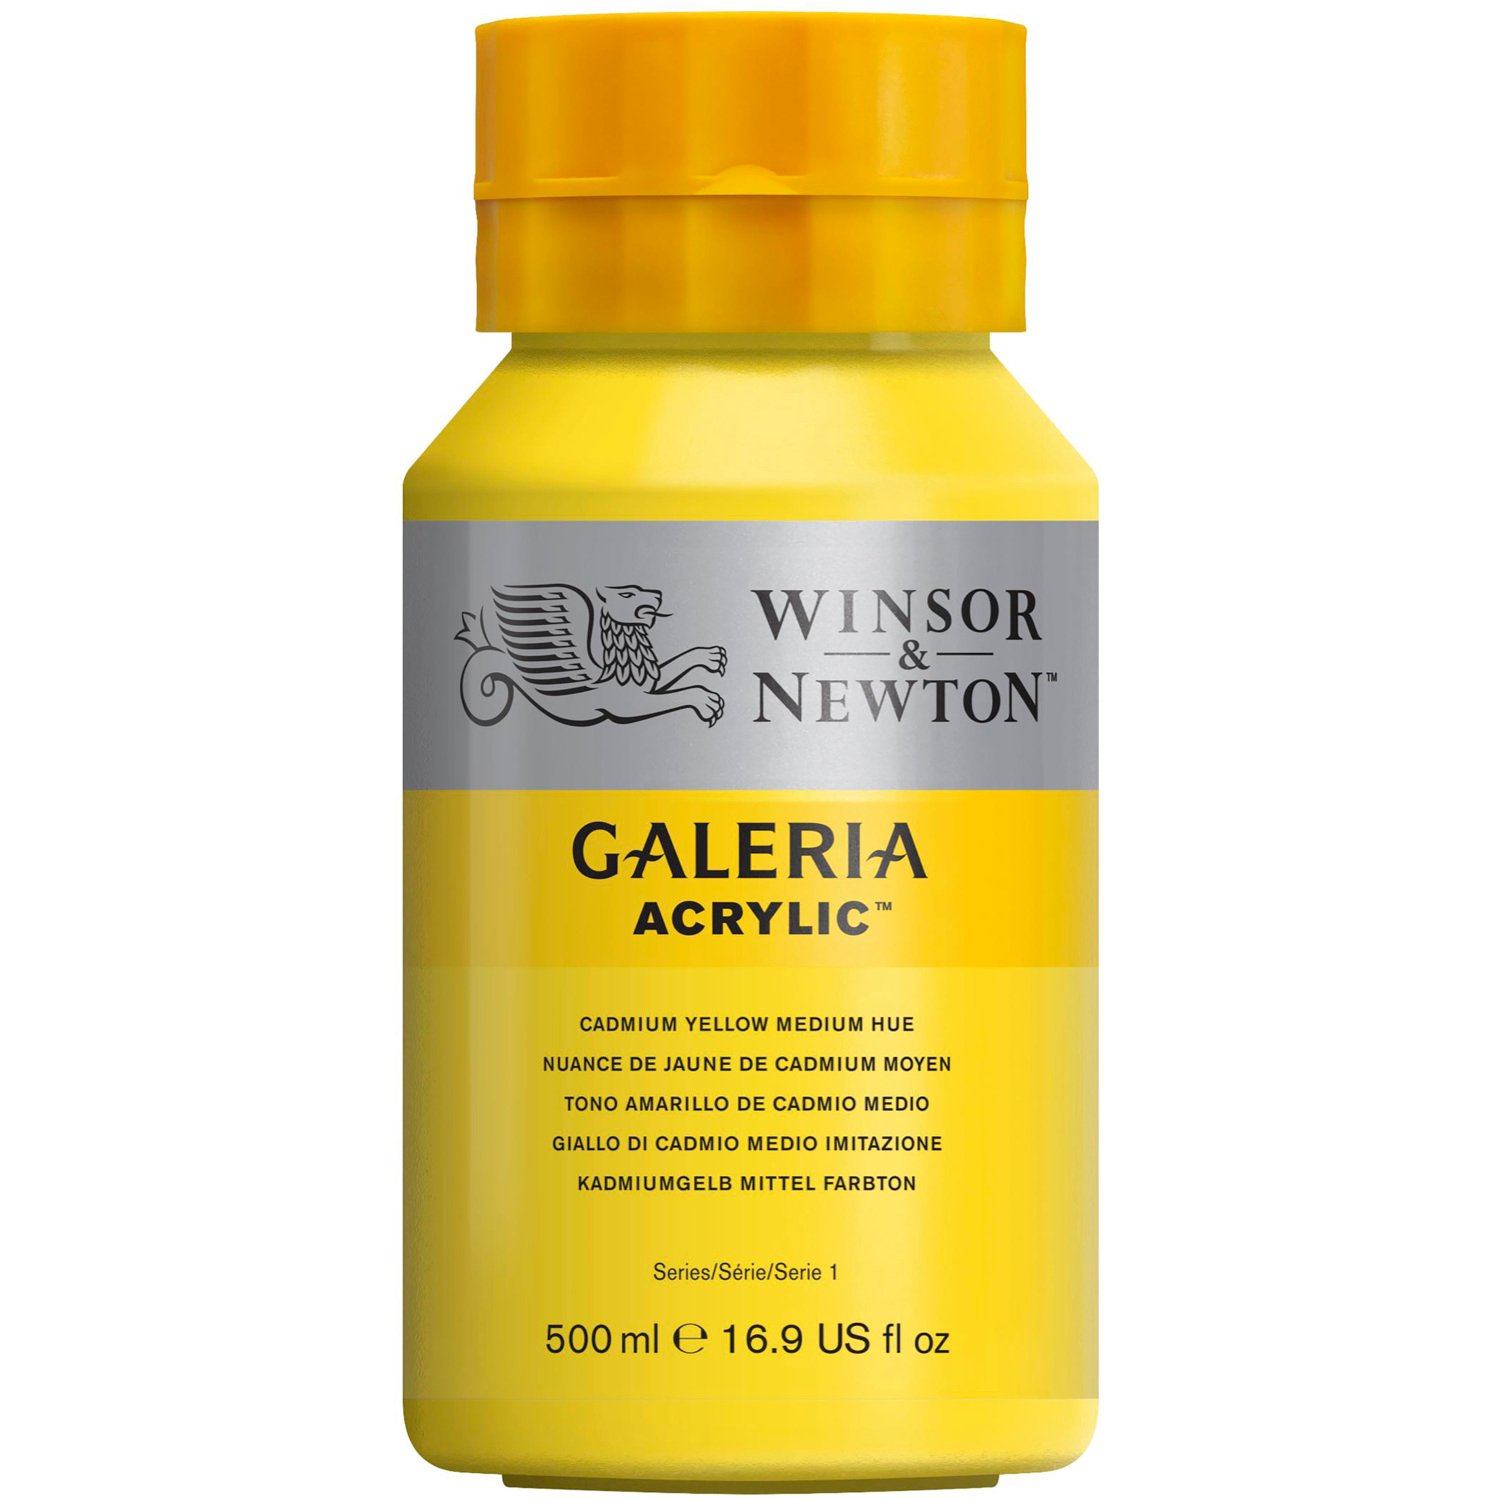 Galeria Acrylic - Cad Yellow Medium Hue - Cad Yellow Med Image 1